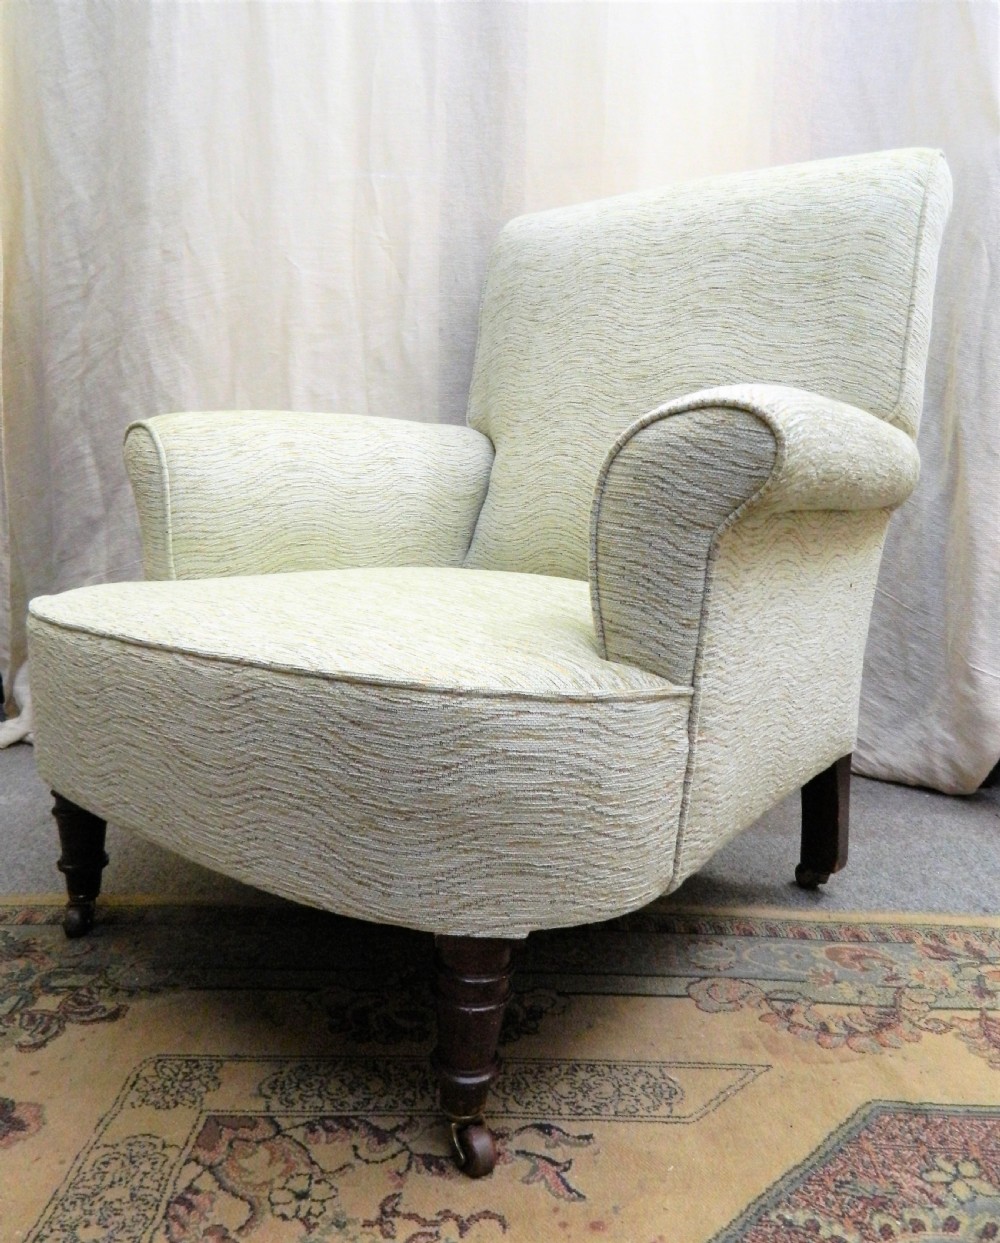 19th century low armchair